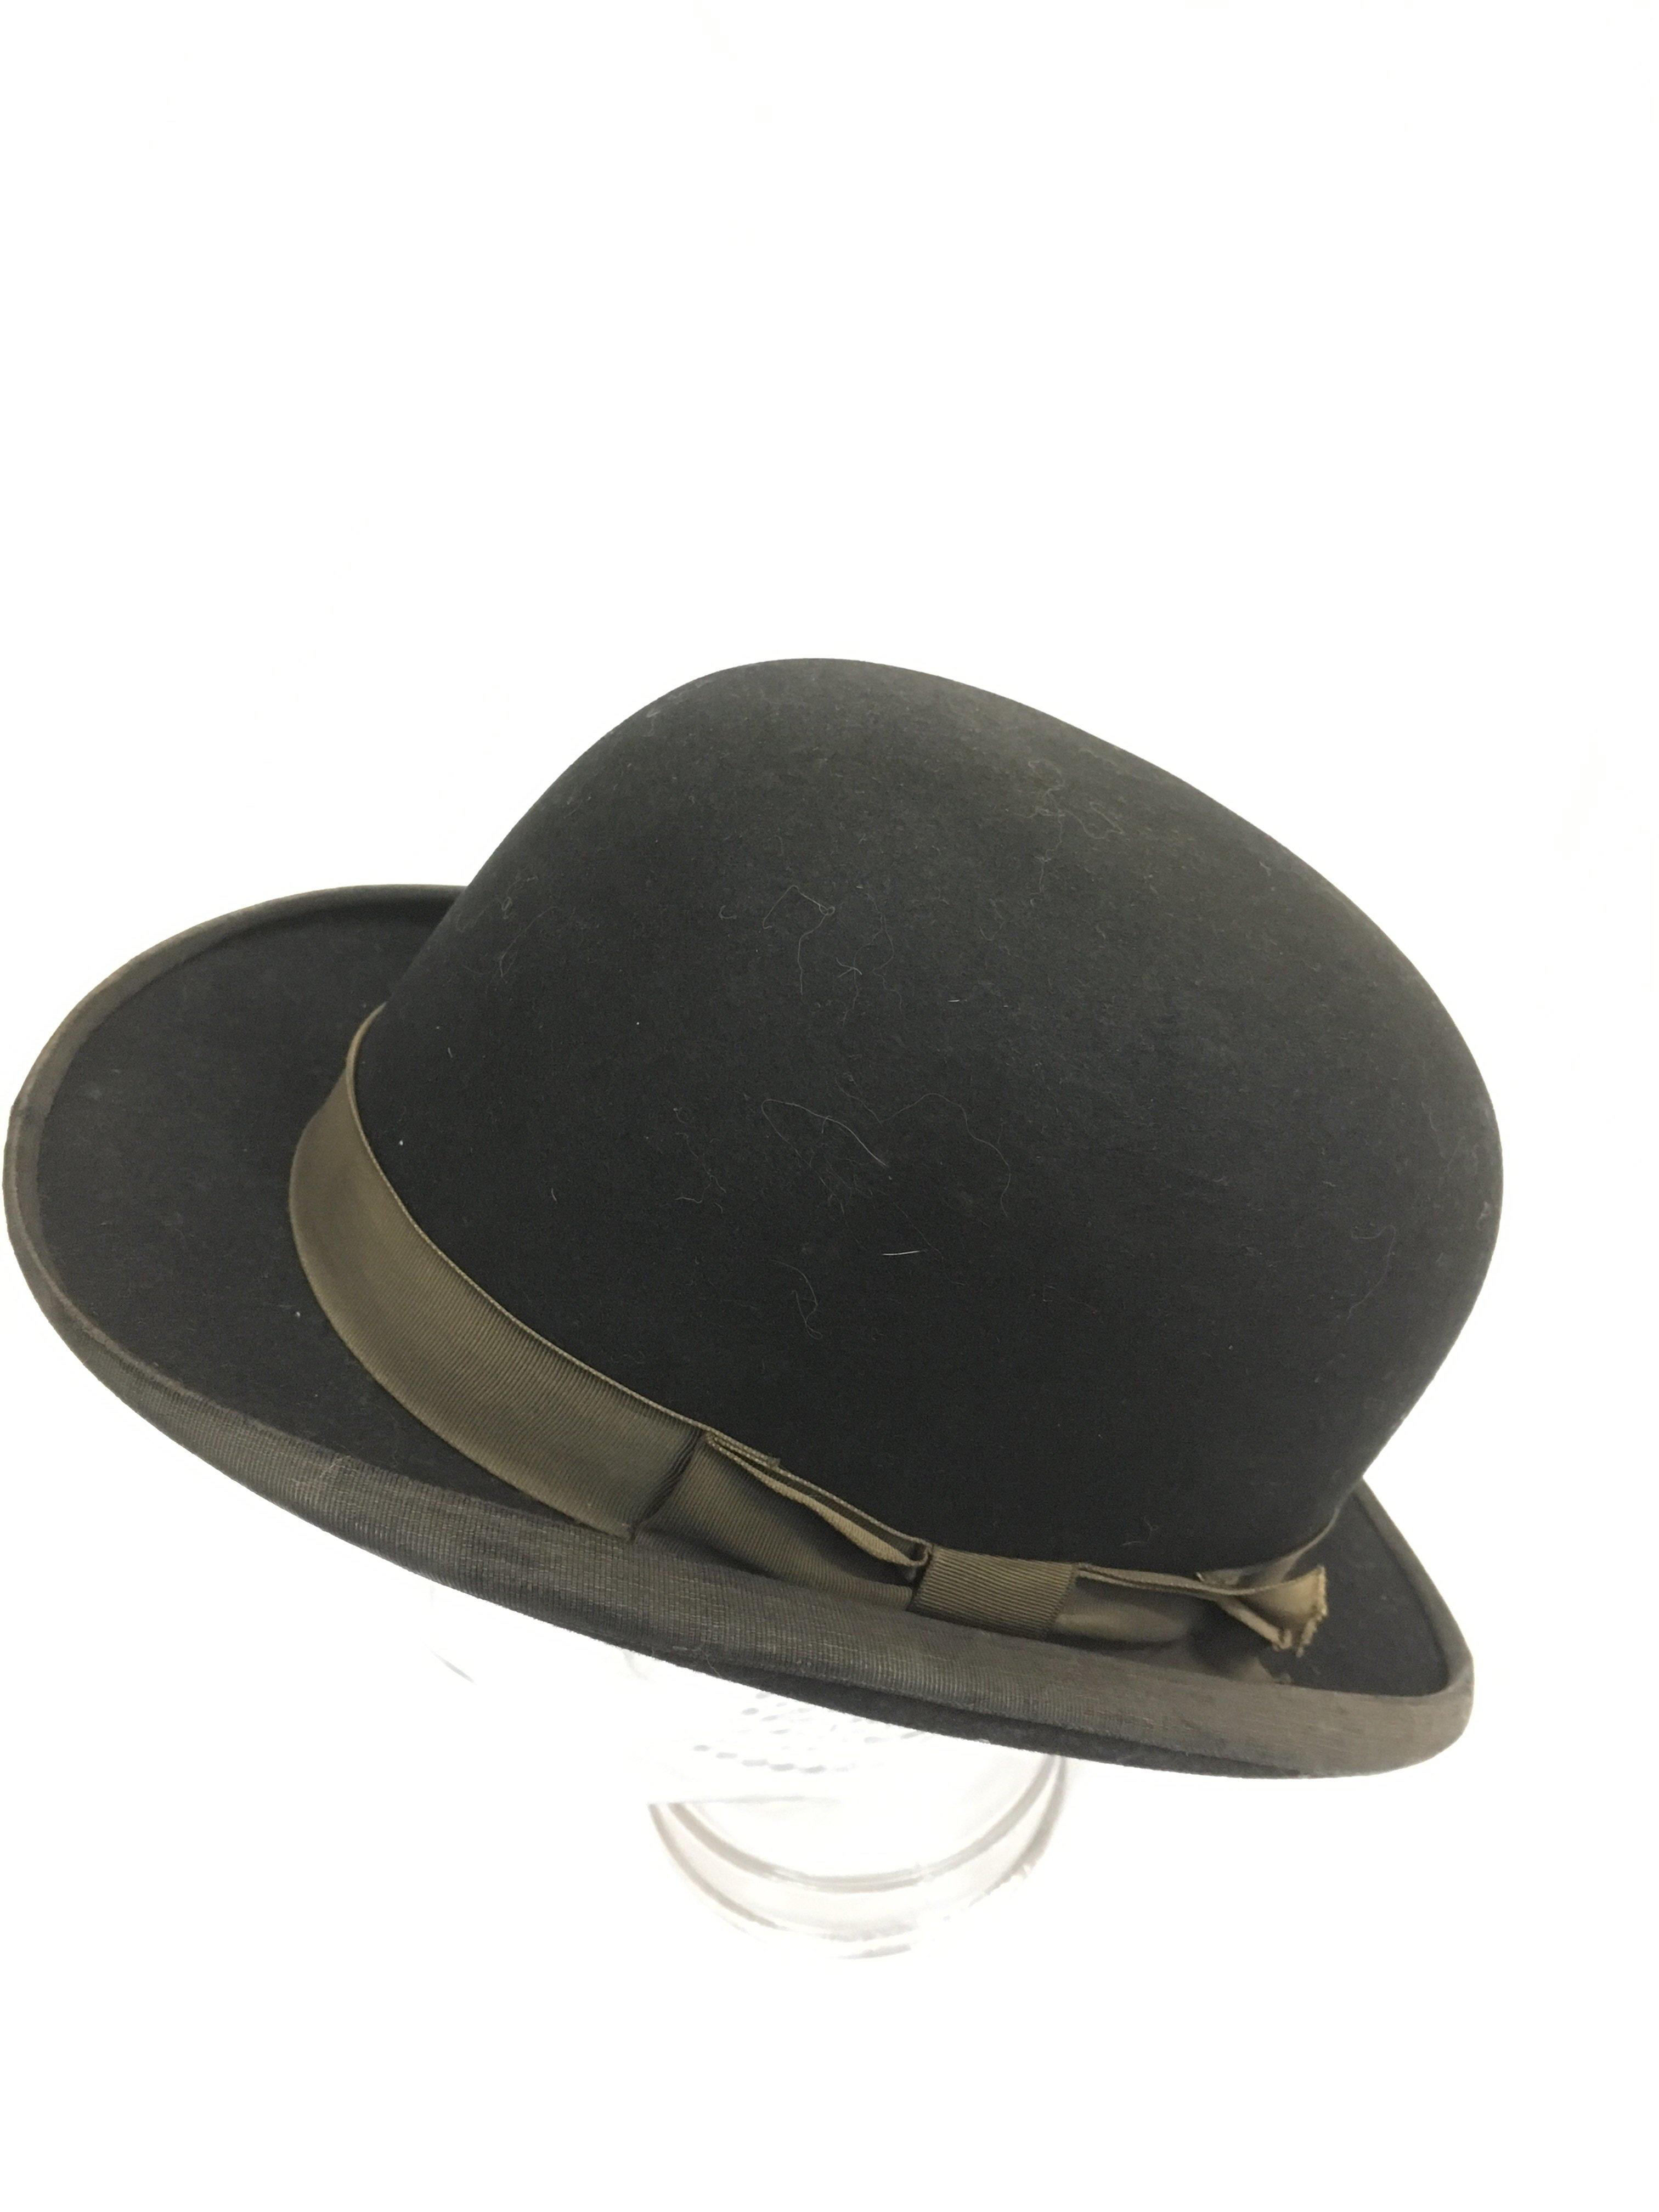 A vintage bowler hat